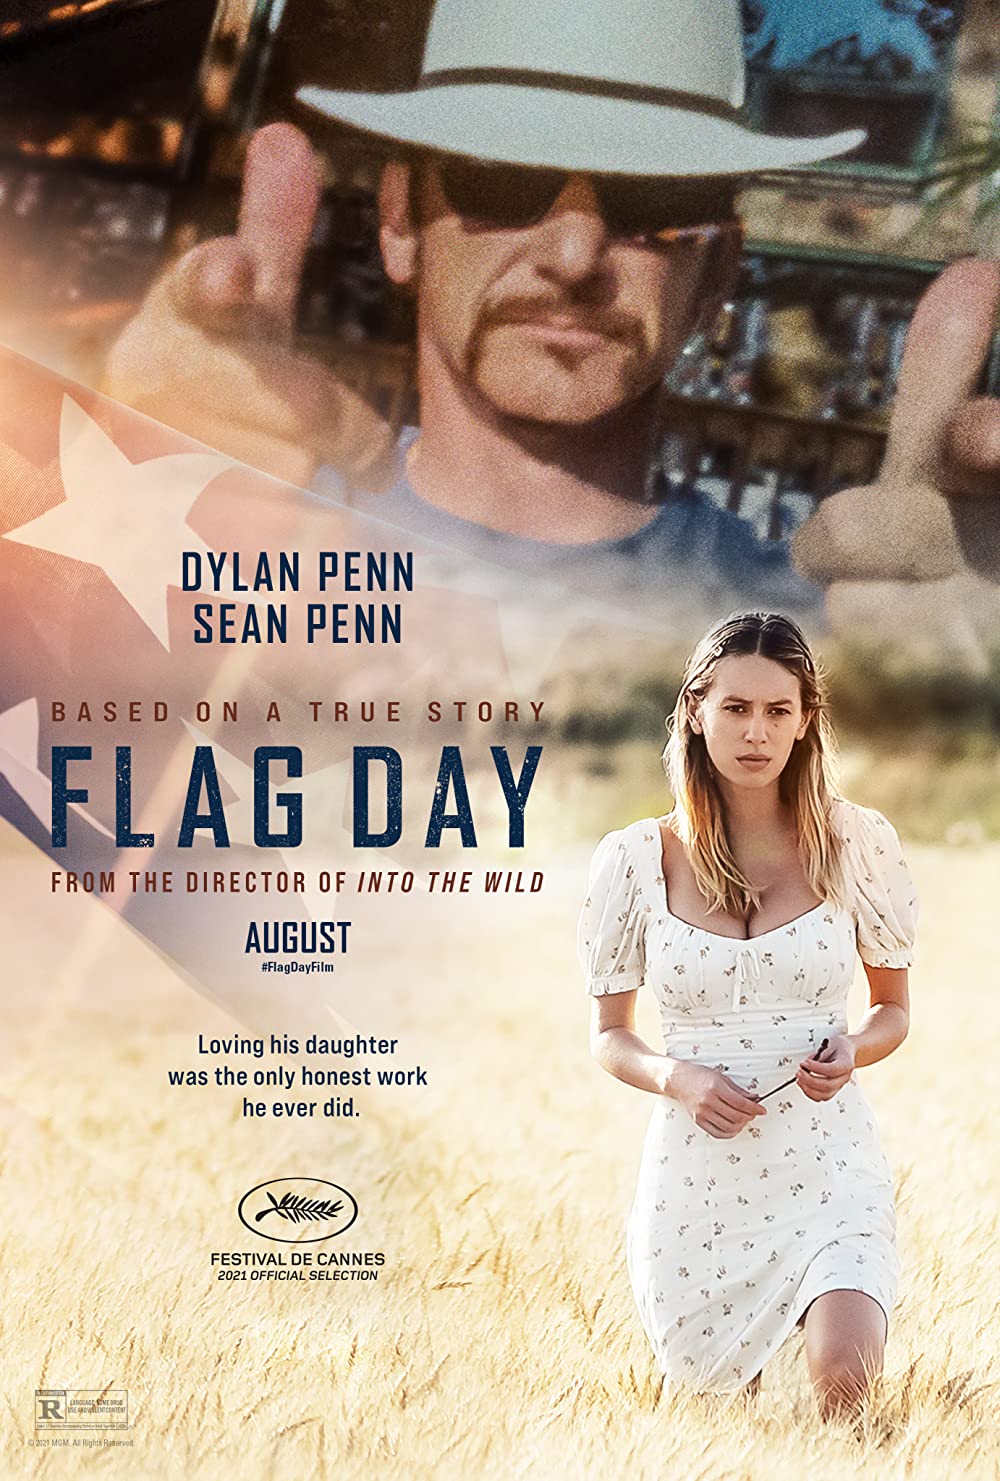 Stiahni si Filmy CZ/SK dabing  Den vlajky / Flag Day (2021)(CZ)[1080p] = CSFD 55%